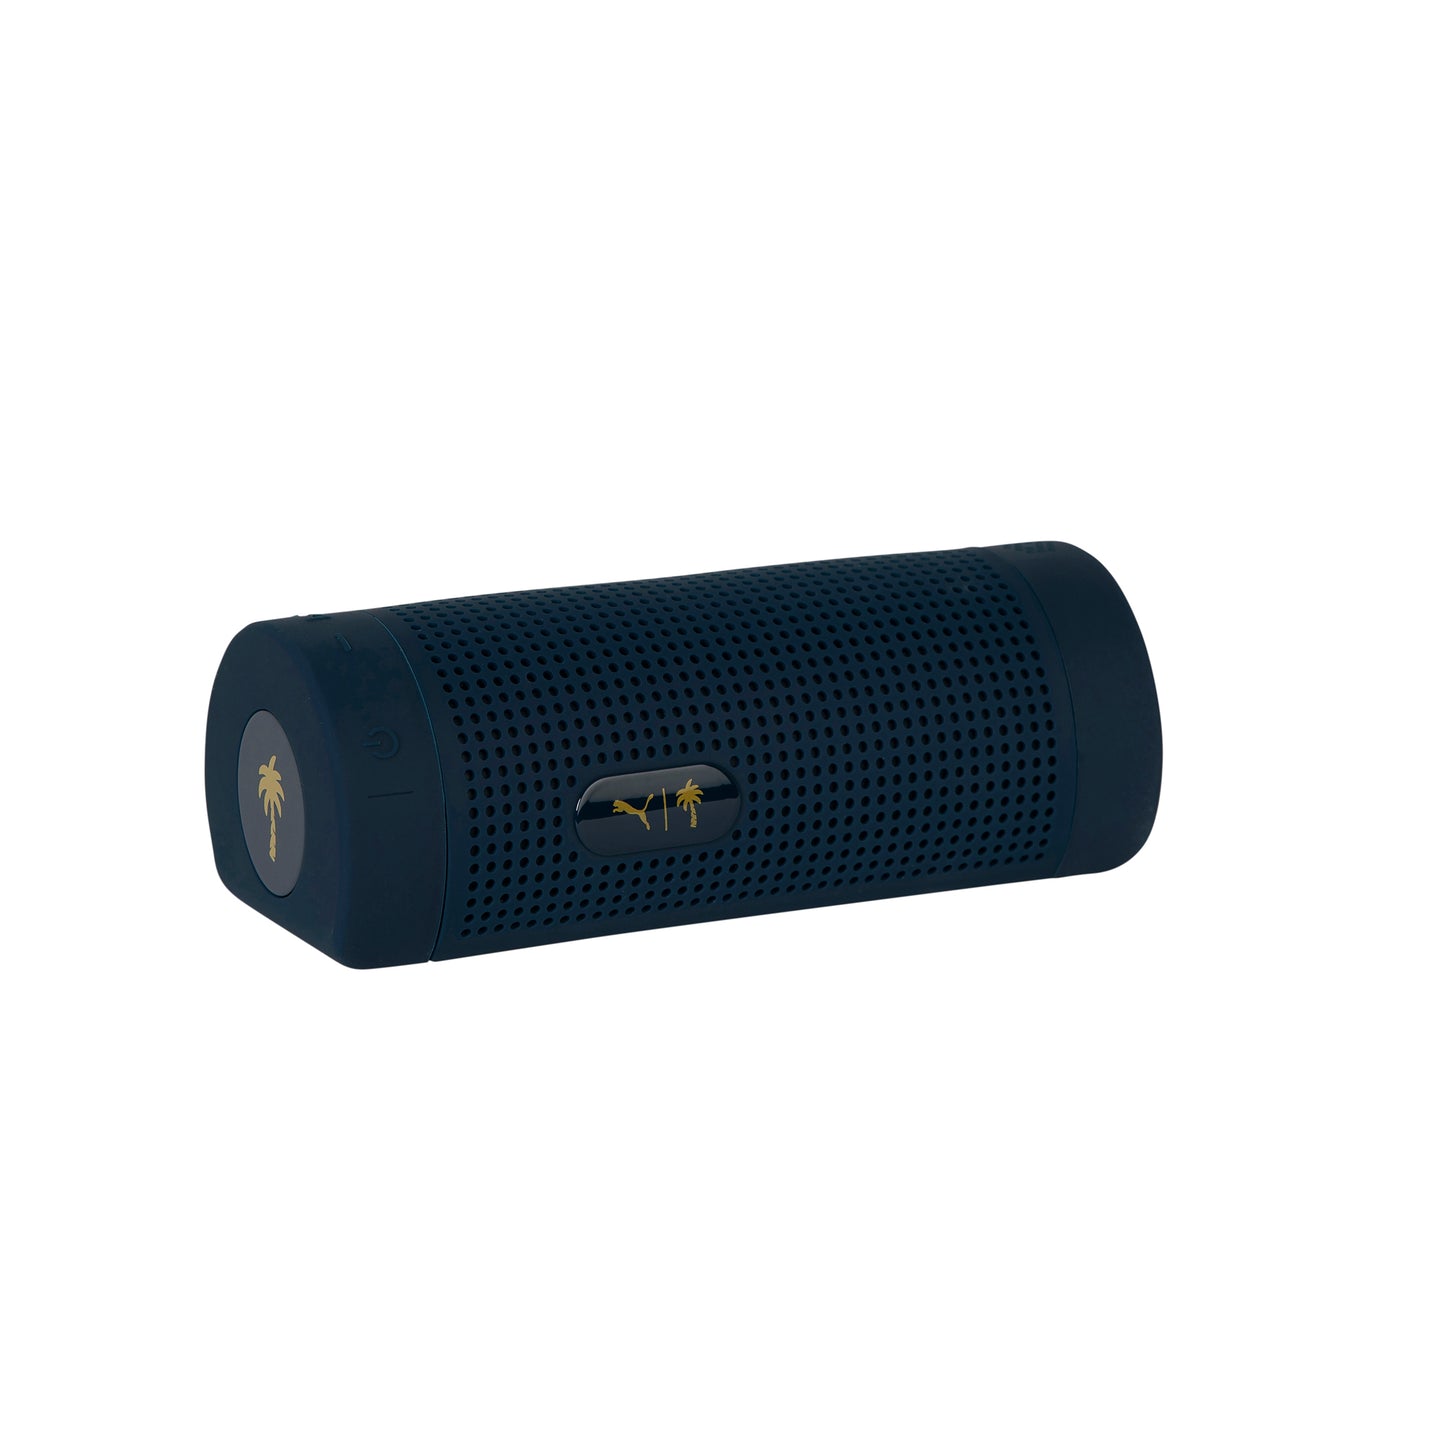 Limited Edition - PUMA x PTC PopTop Bluetooth Speaker